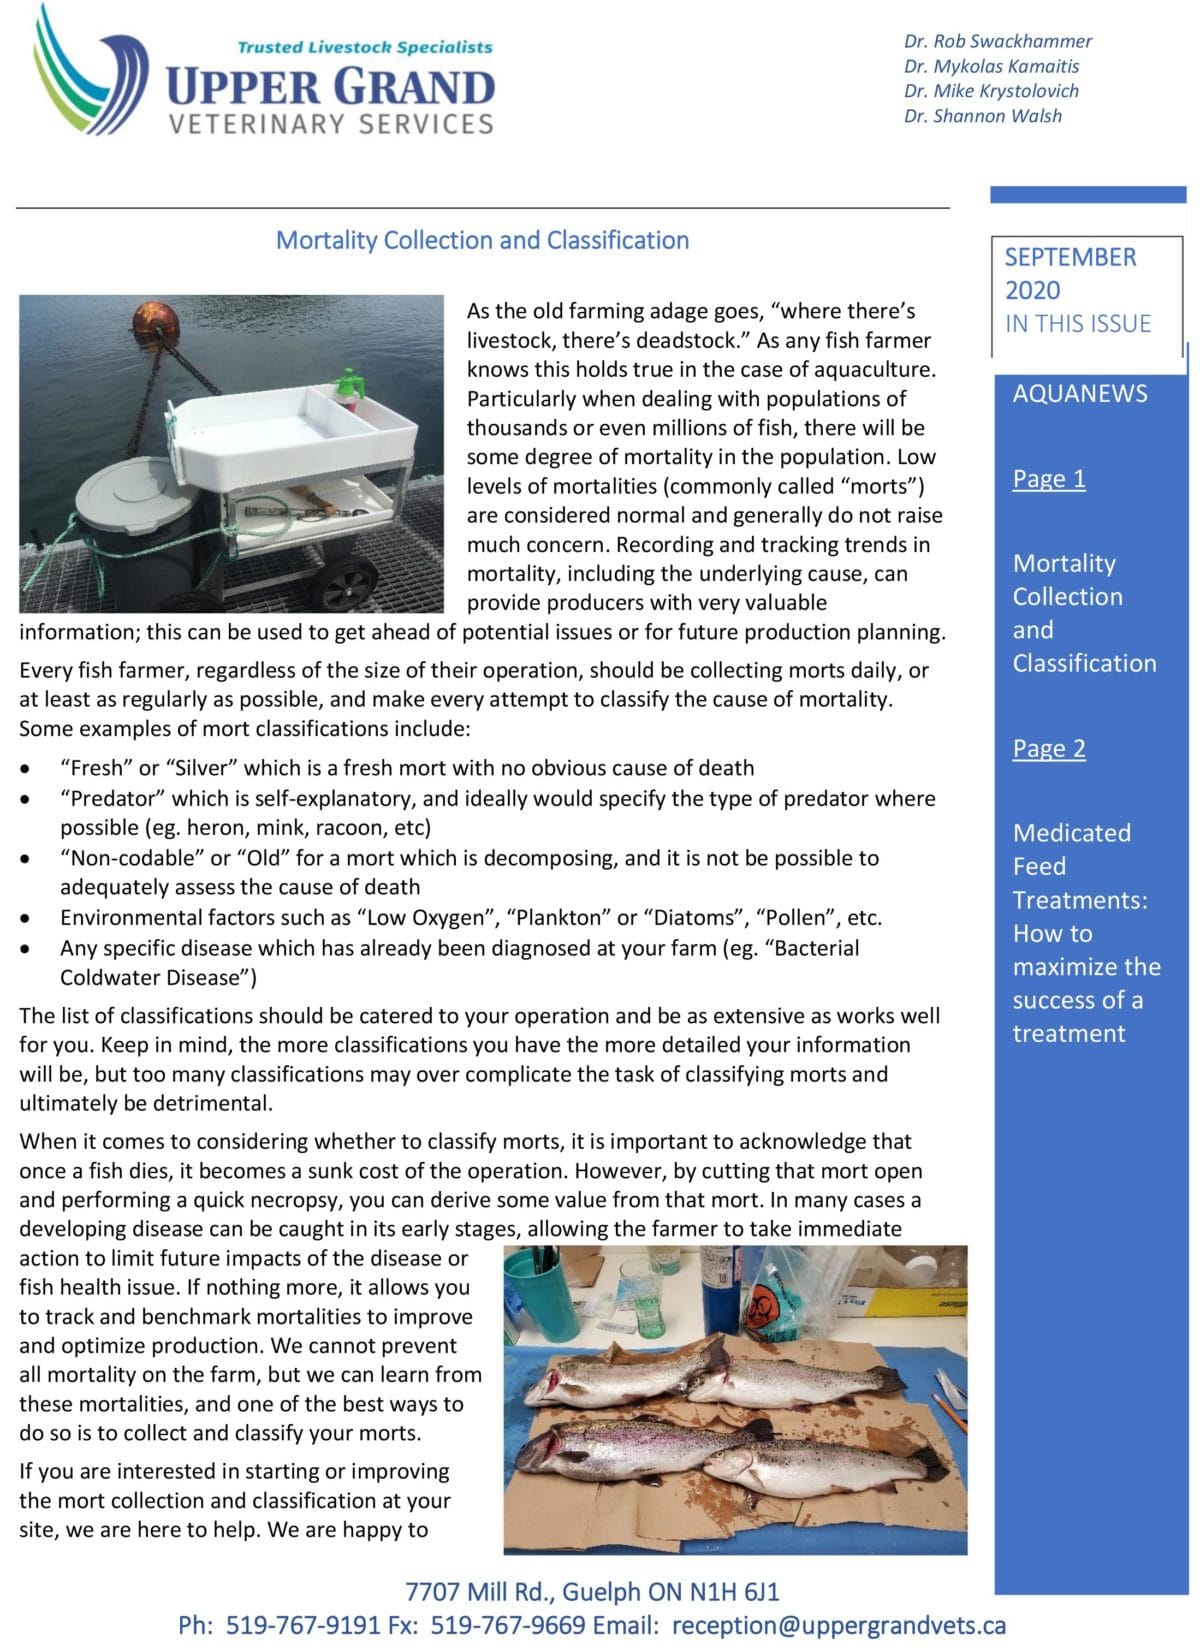 UGVS-Aquaculture-Newsletter-Sept-2020-updated-1-copy-1200x1650.jpg